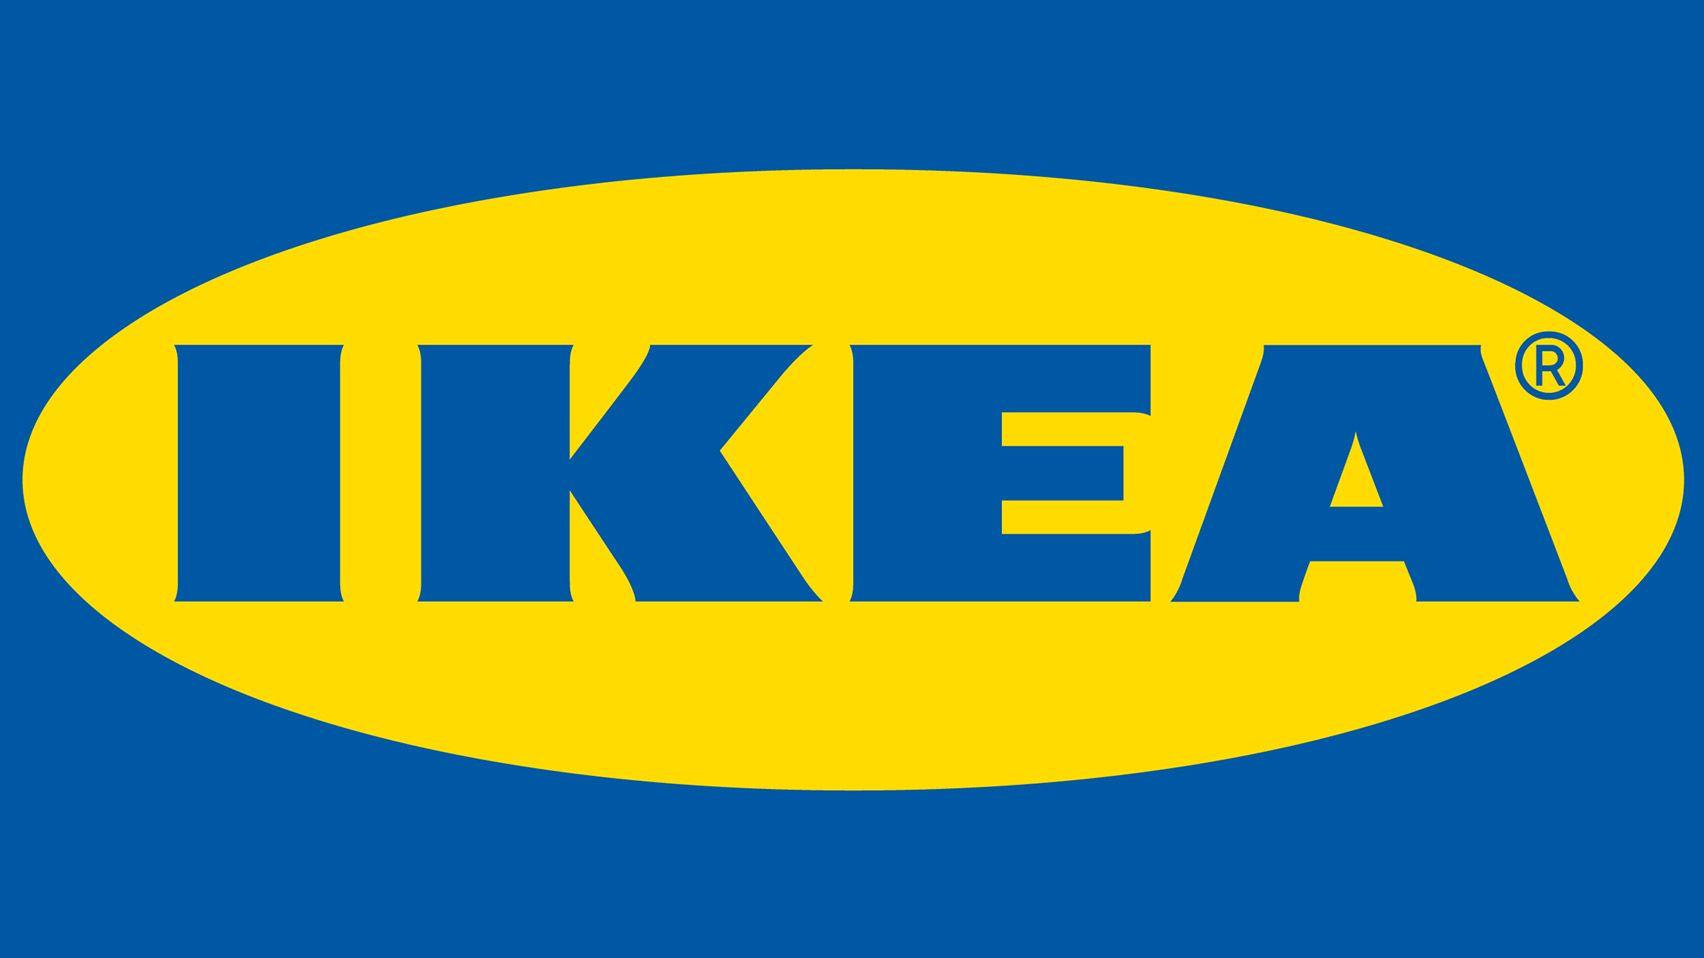 Static Logo - IKEA logo made future proof in subtle redesign